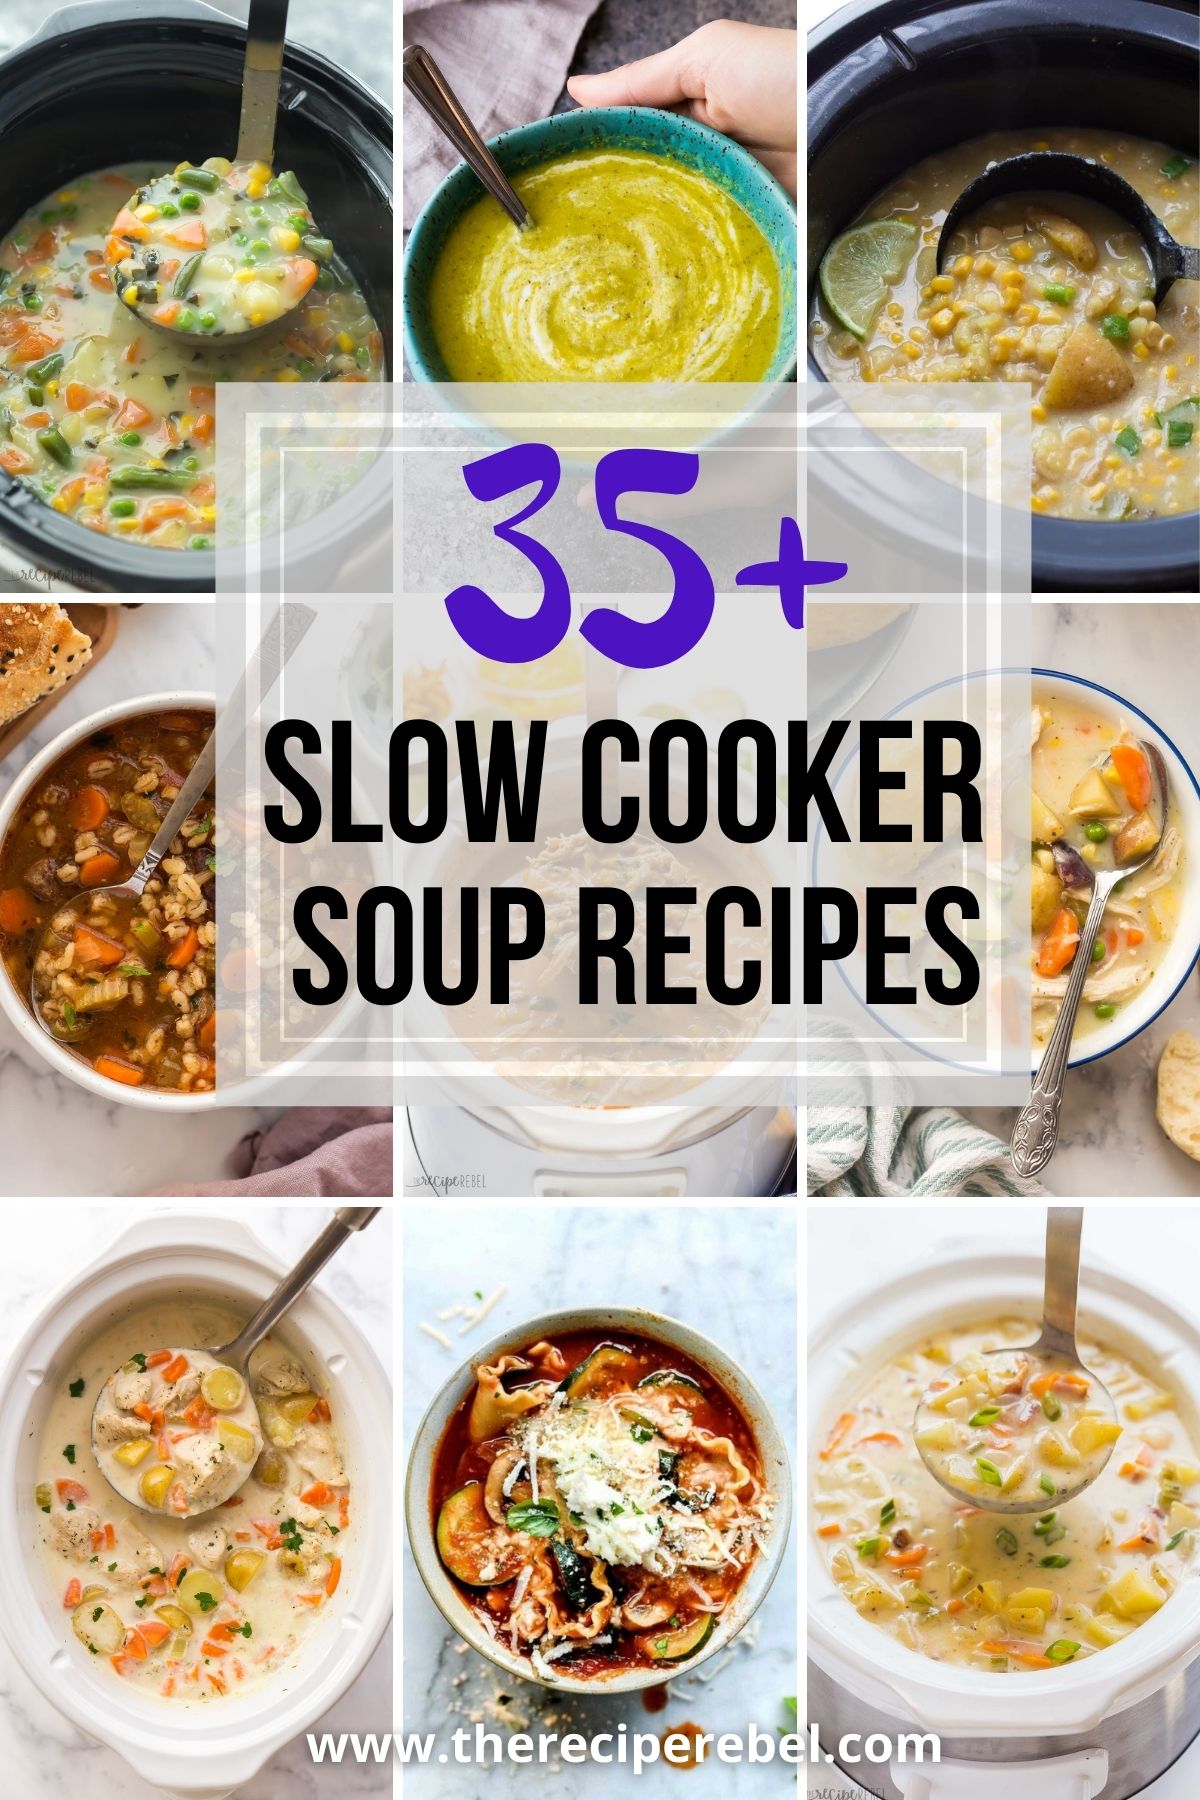 https://www.thereciperebel.com/wp-content/uploads/2019/01/crockpot-soup-recipes-www.thereciperebel.com-pin-1.jpg